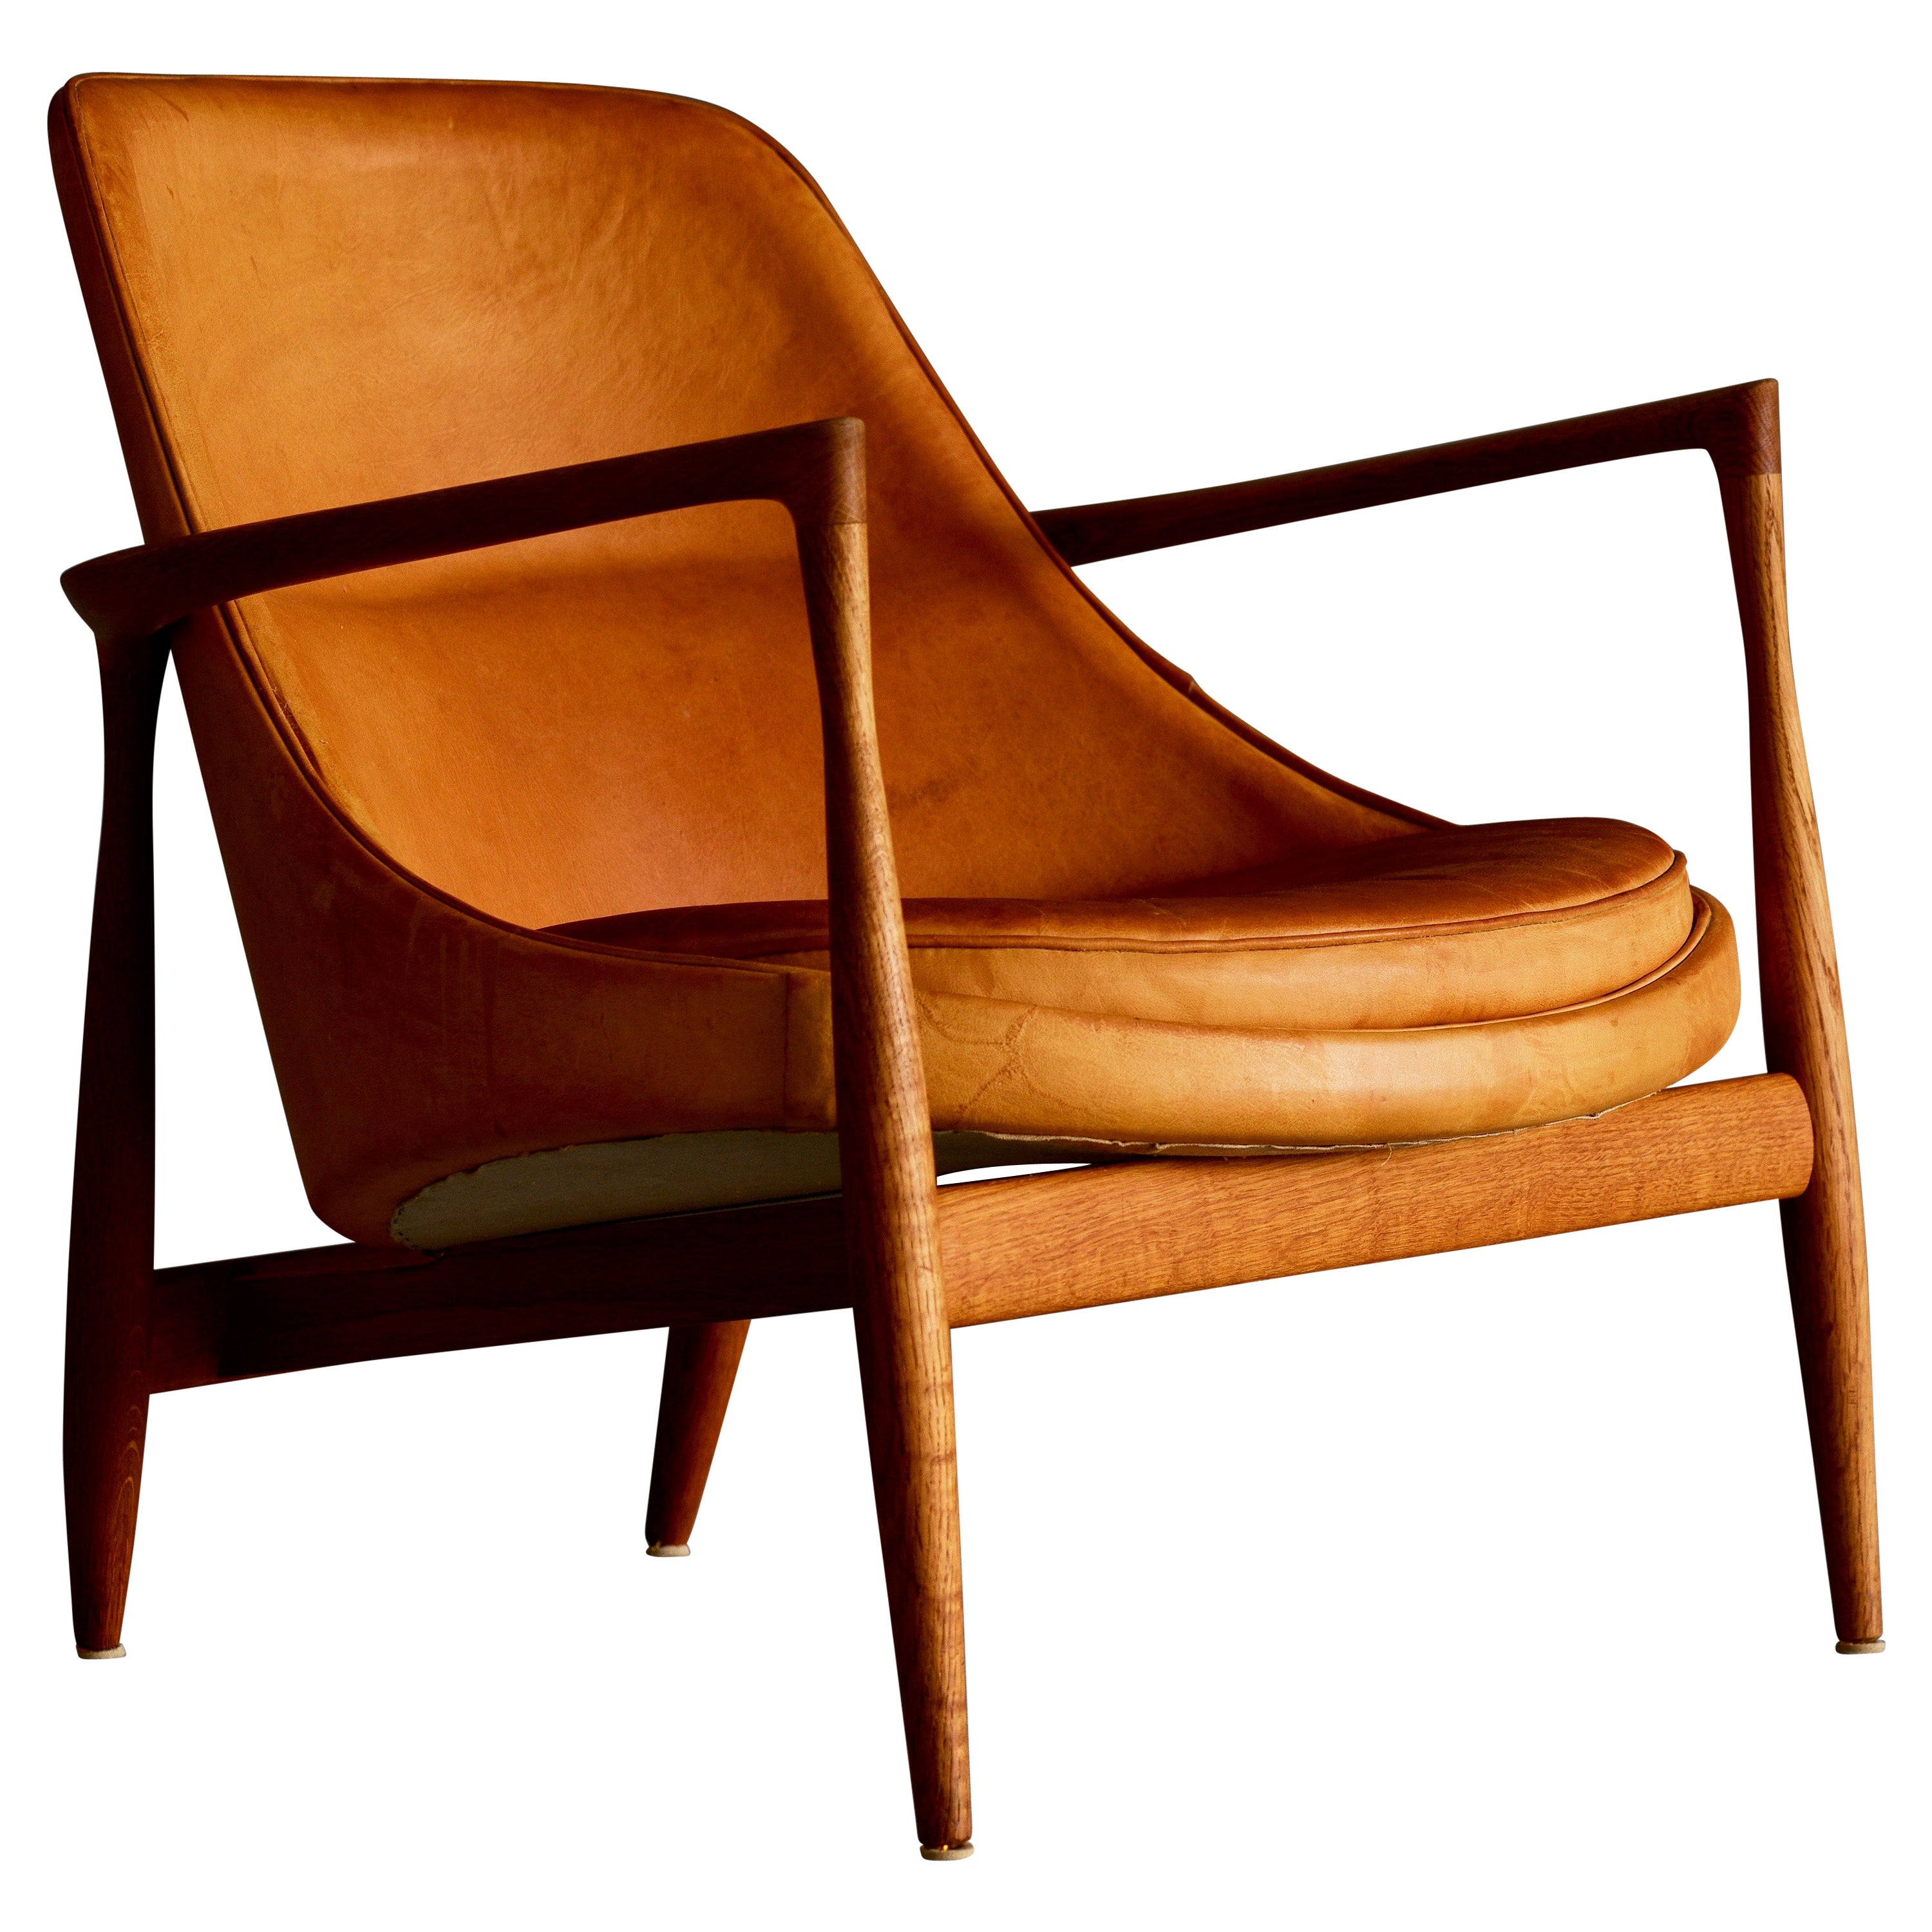 "Elizabeth" Chair by Ib Kofod Larsen